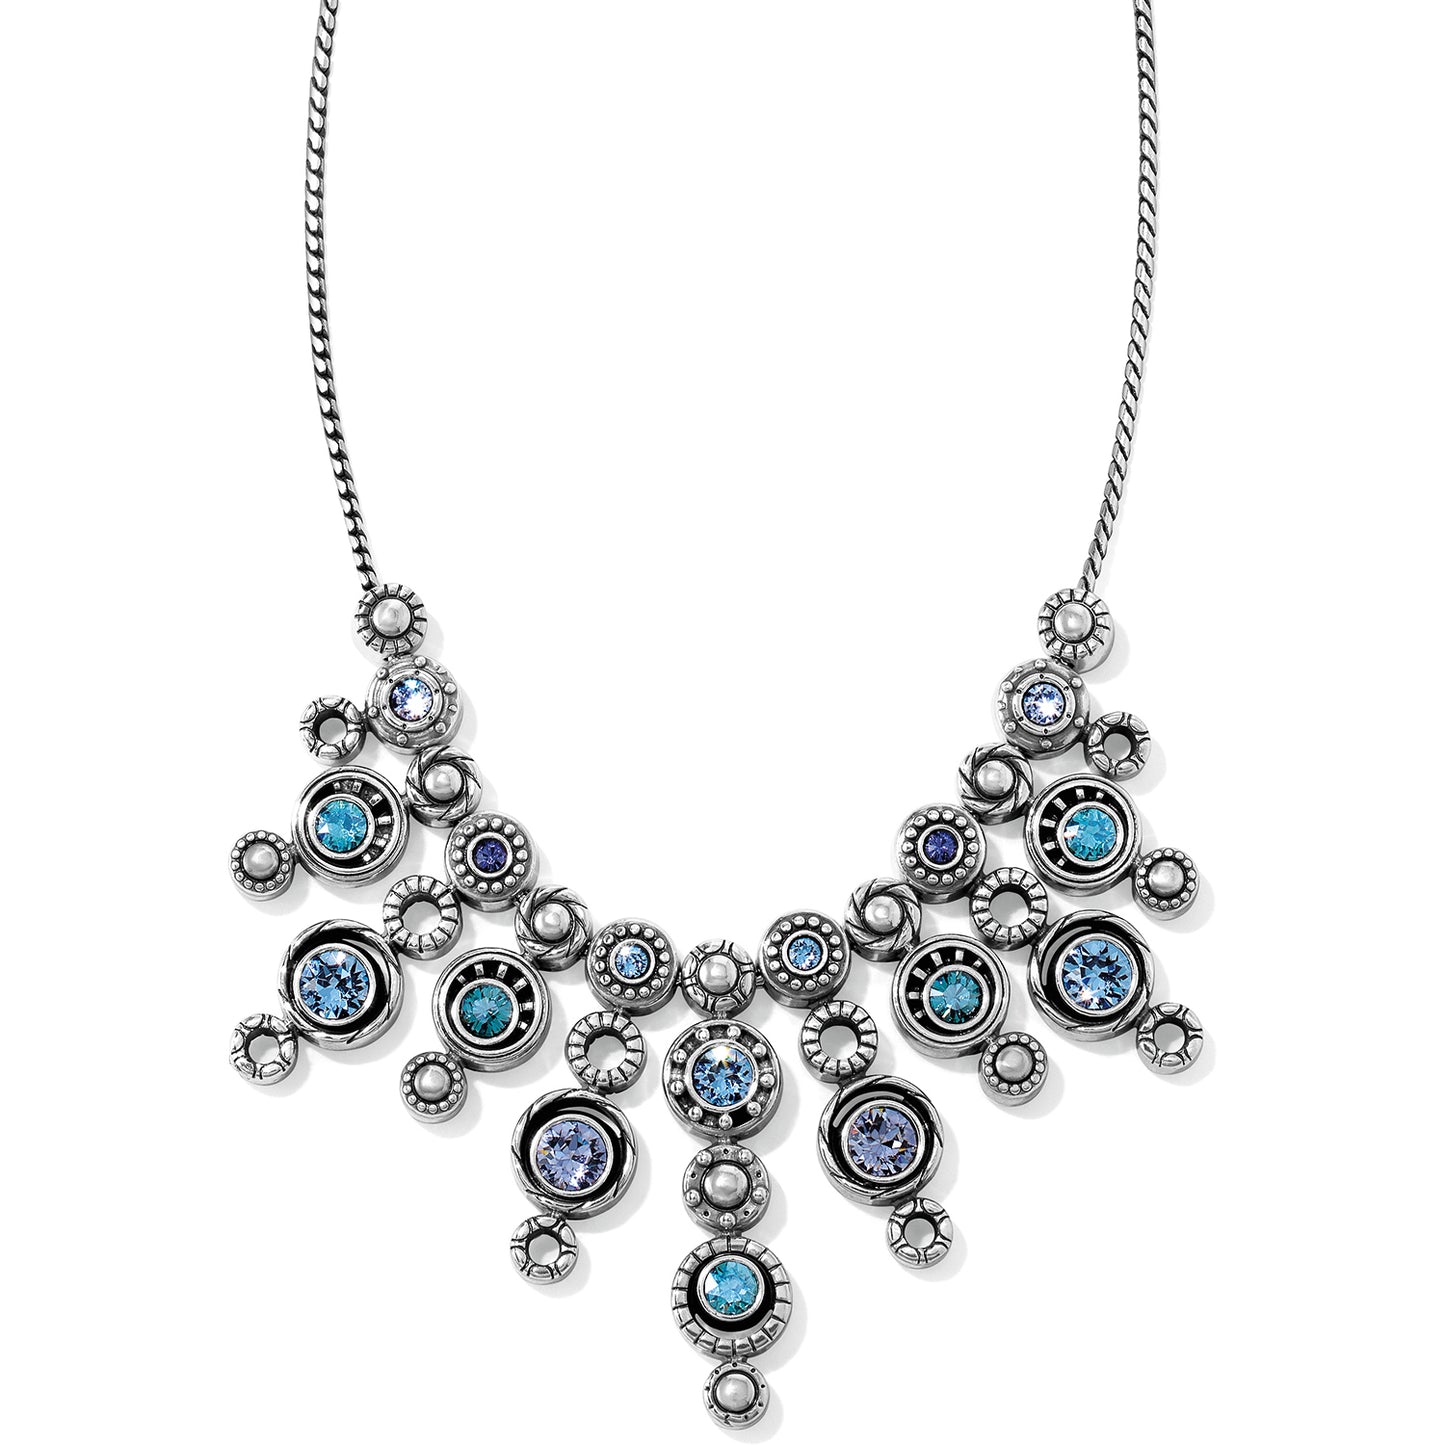 Halo Burst Collar Necklace - Jewelry - SierraLily